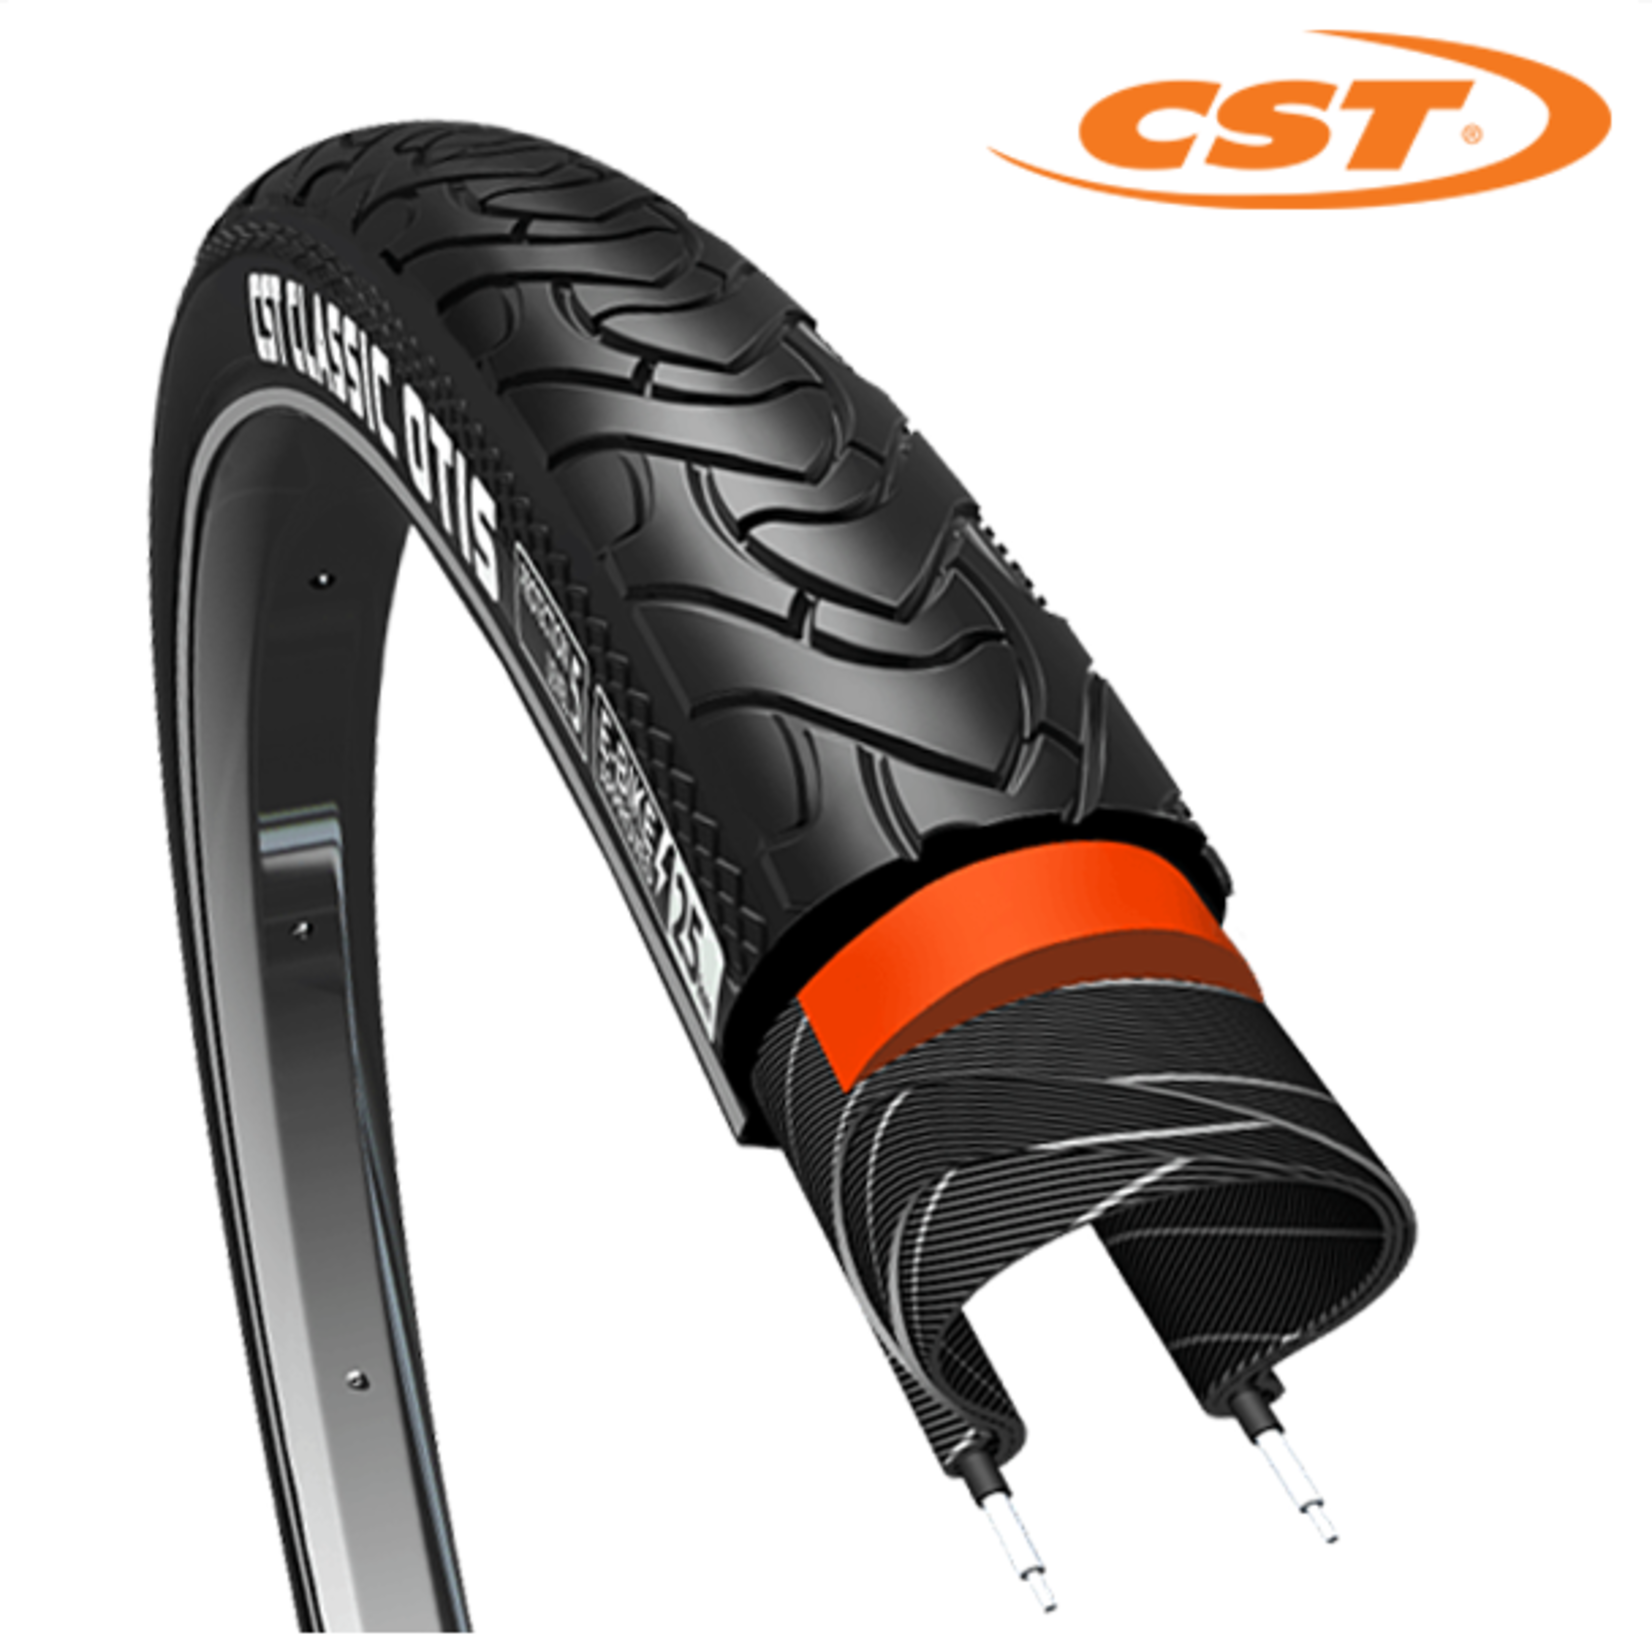 CST Tyre 26 x 1.75  CLASSIC OT